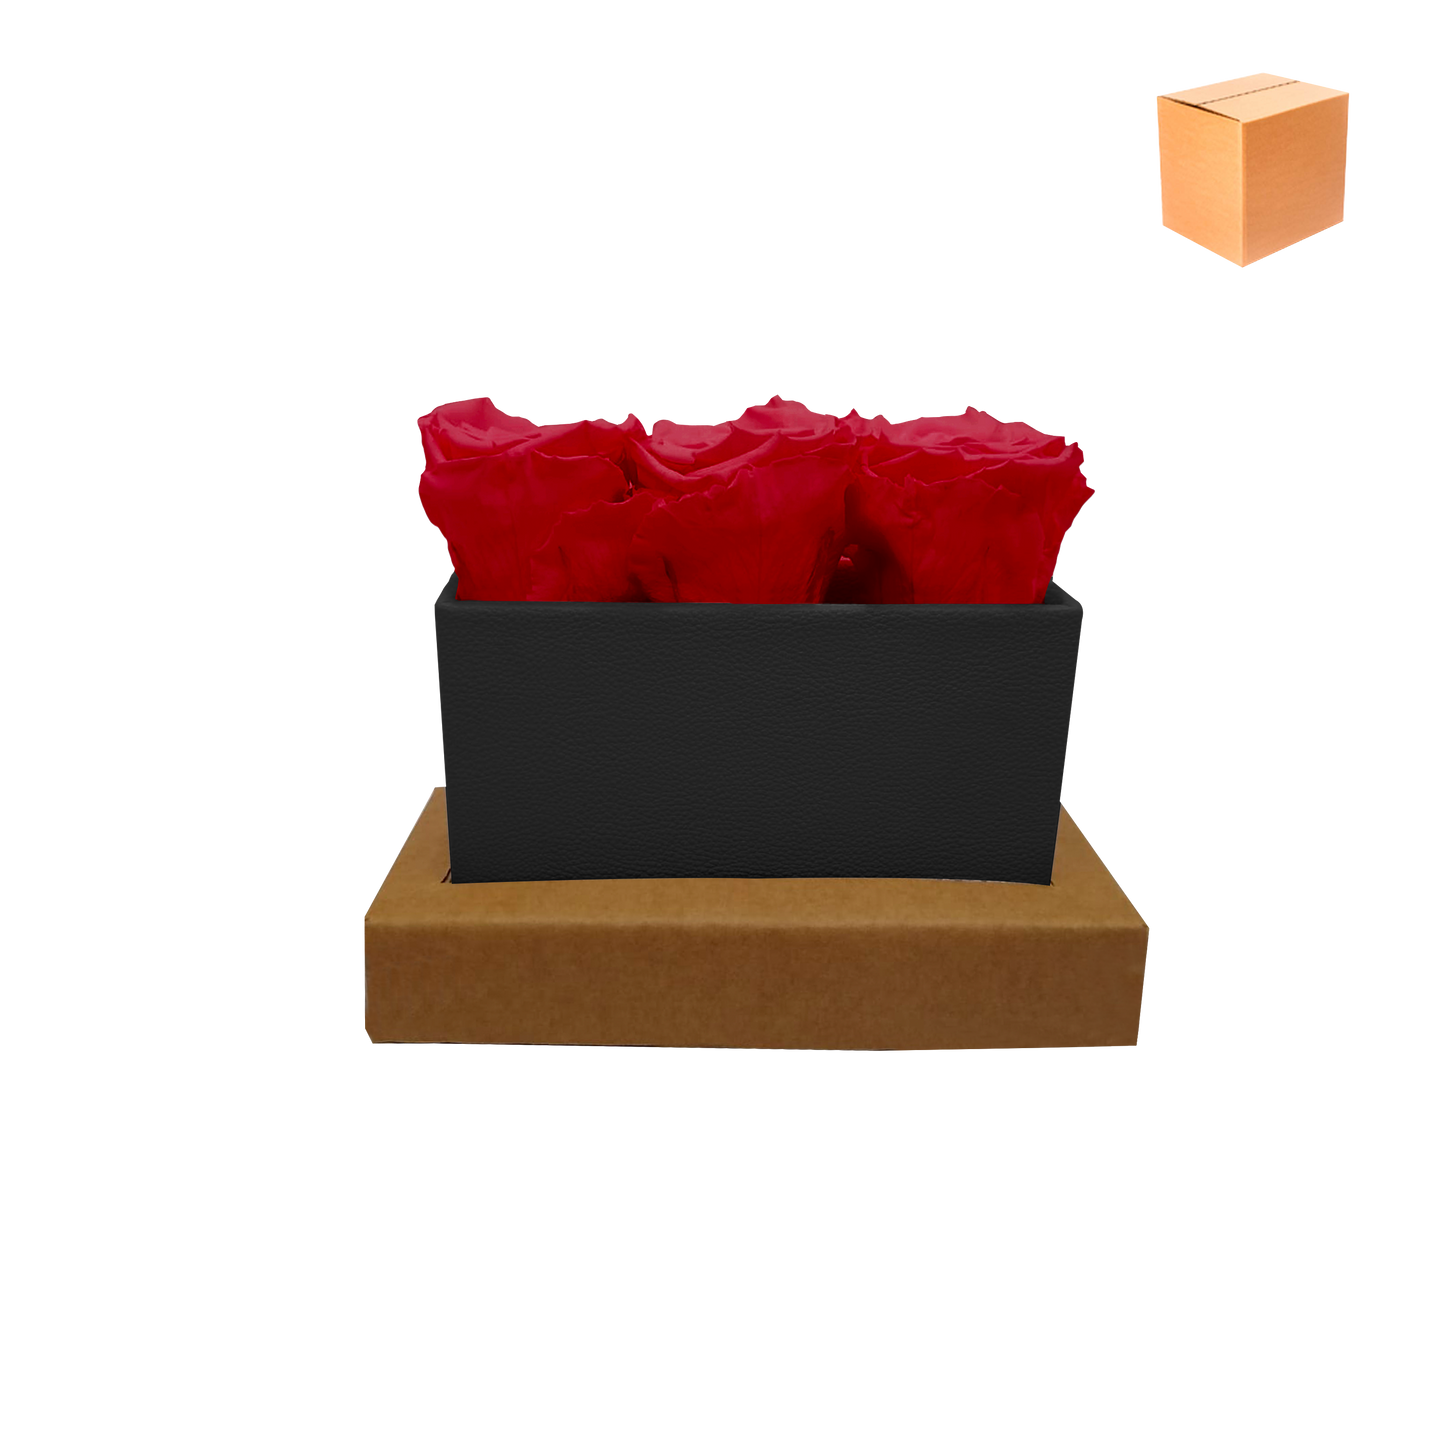 LUXURY 3 PRESERVED ROSE ARRANGEMENT - RECTANGULAR PU LEATHER BOX